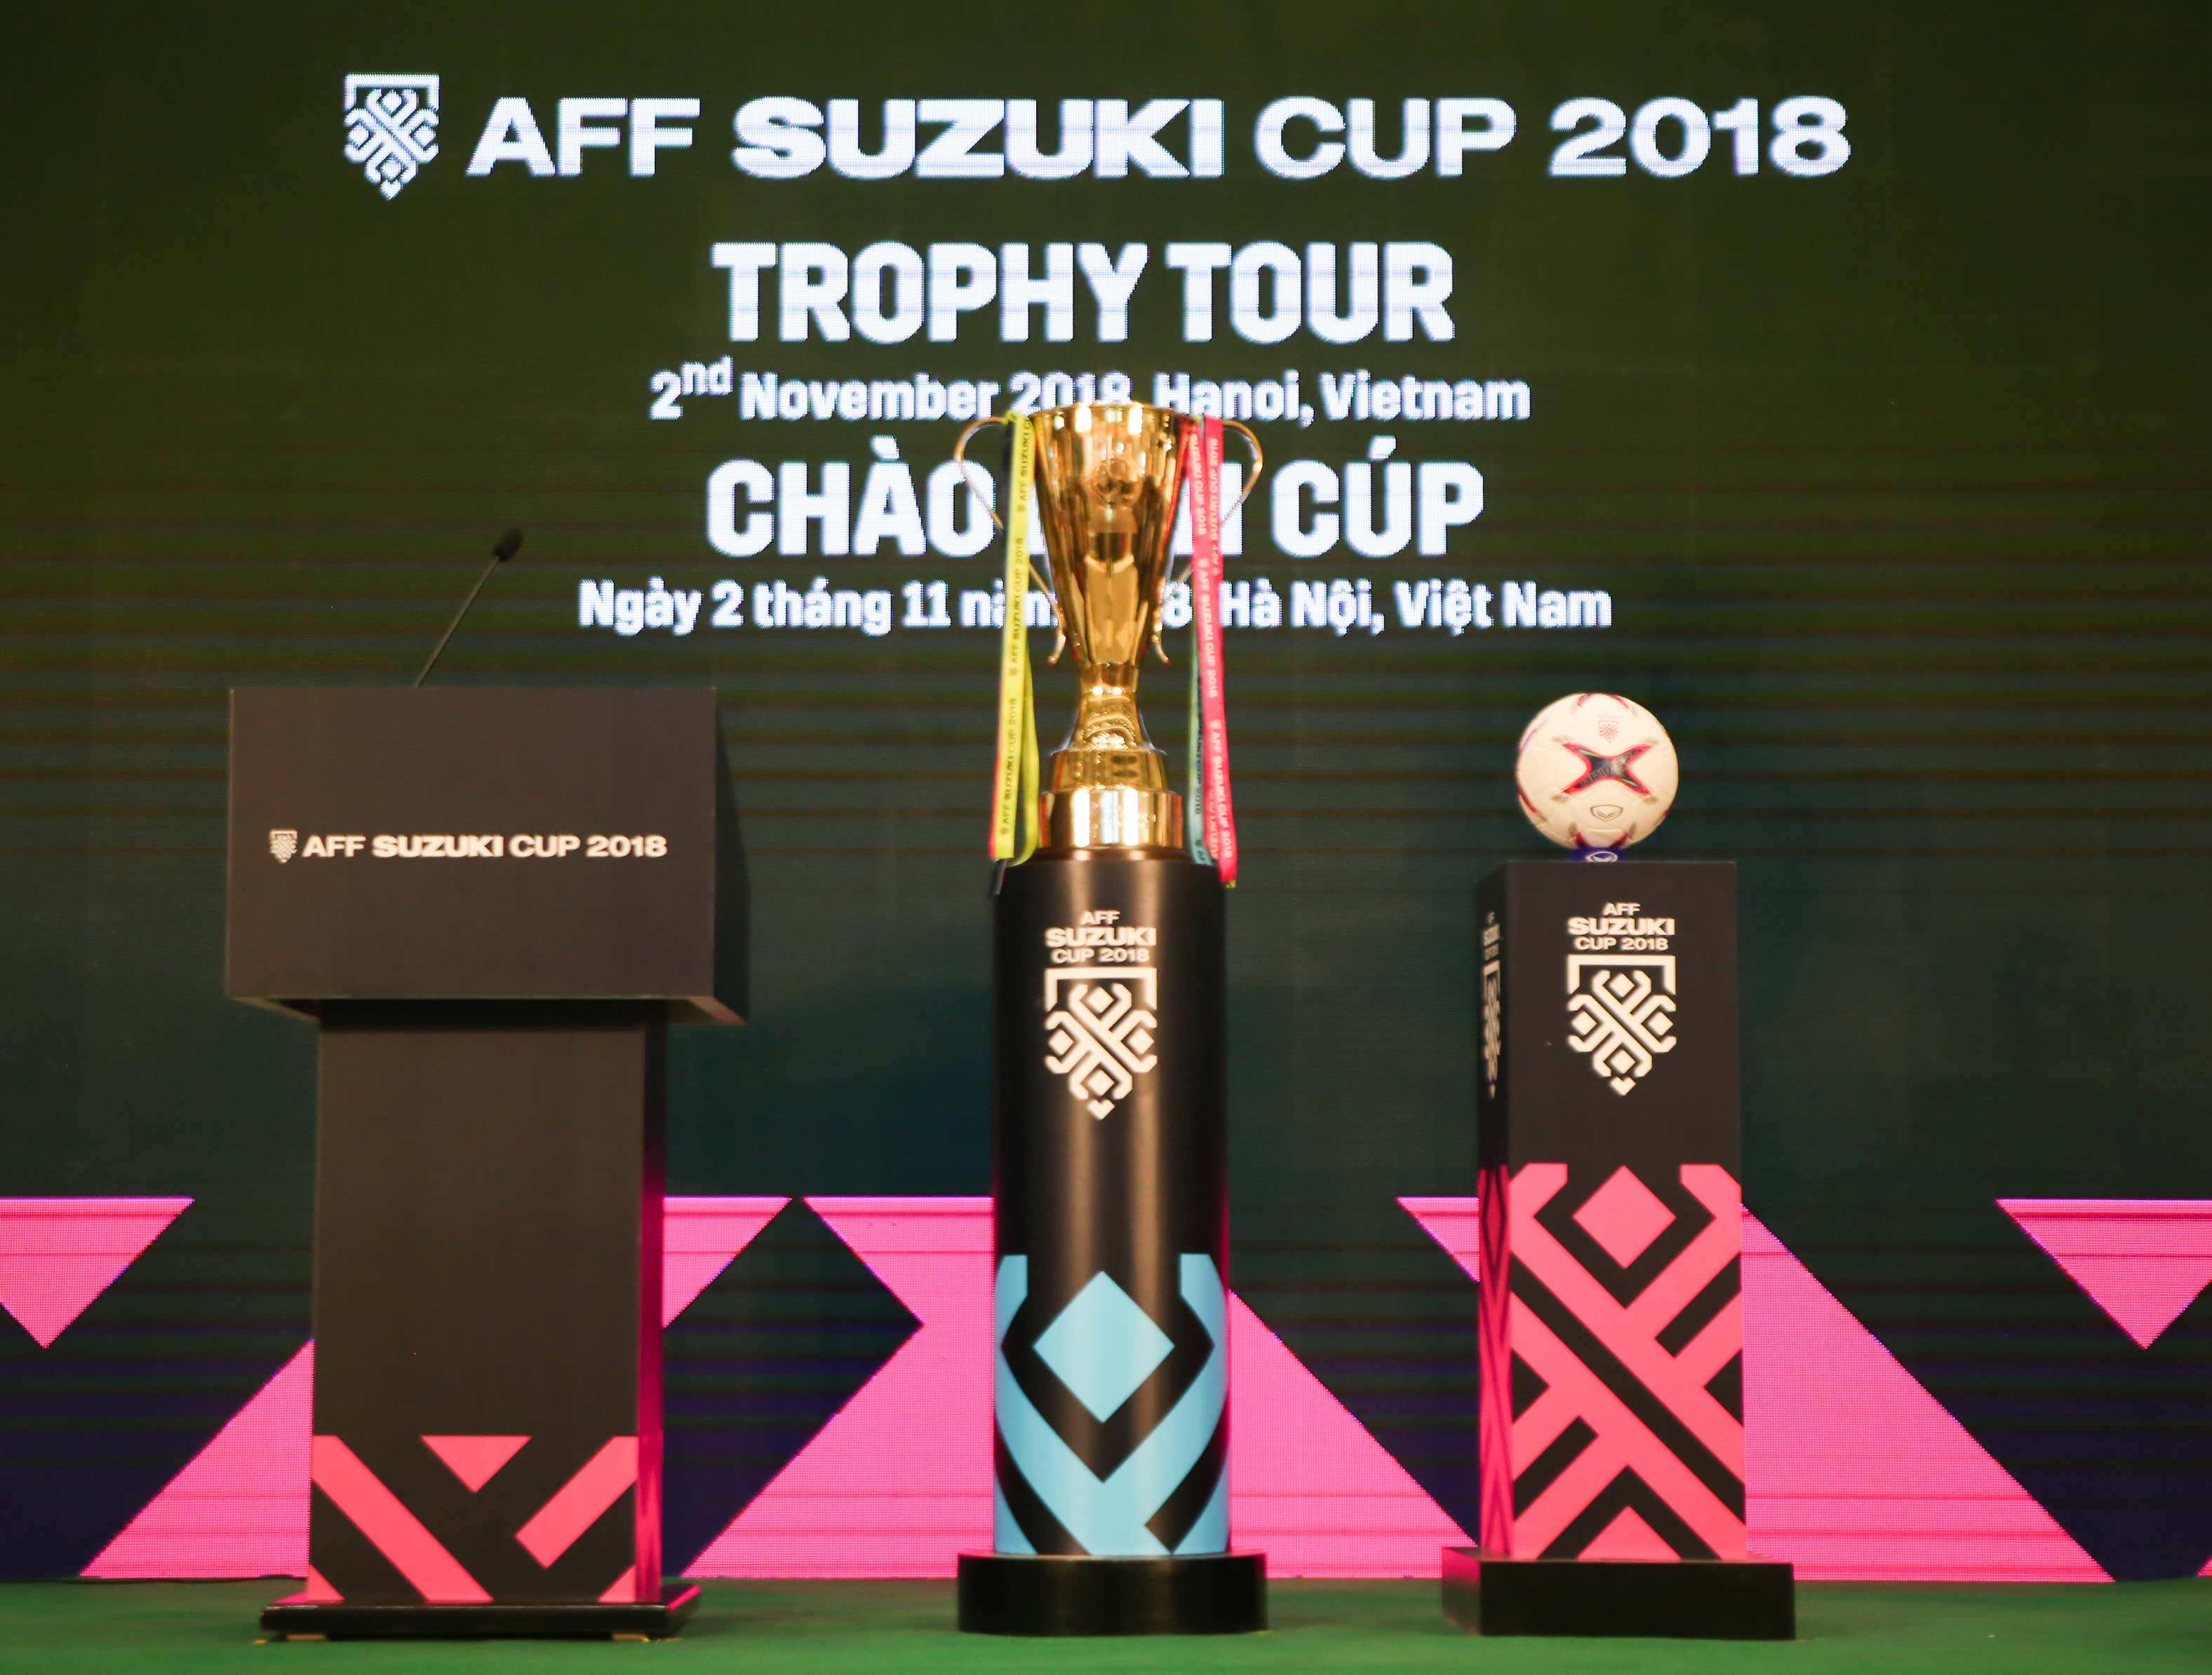 AFF Championship Team profiles